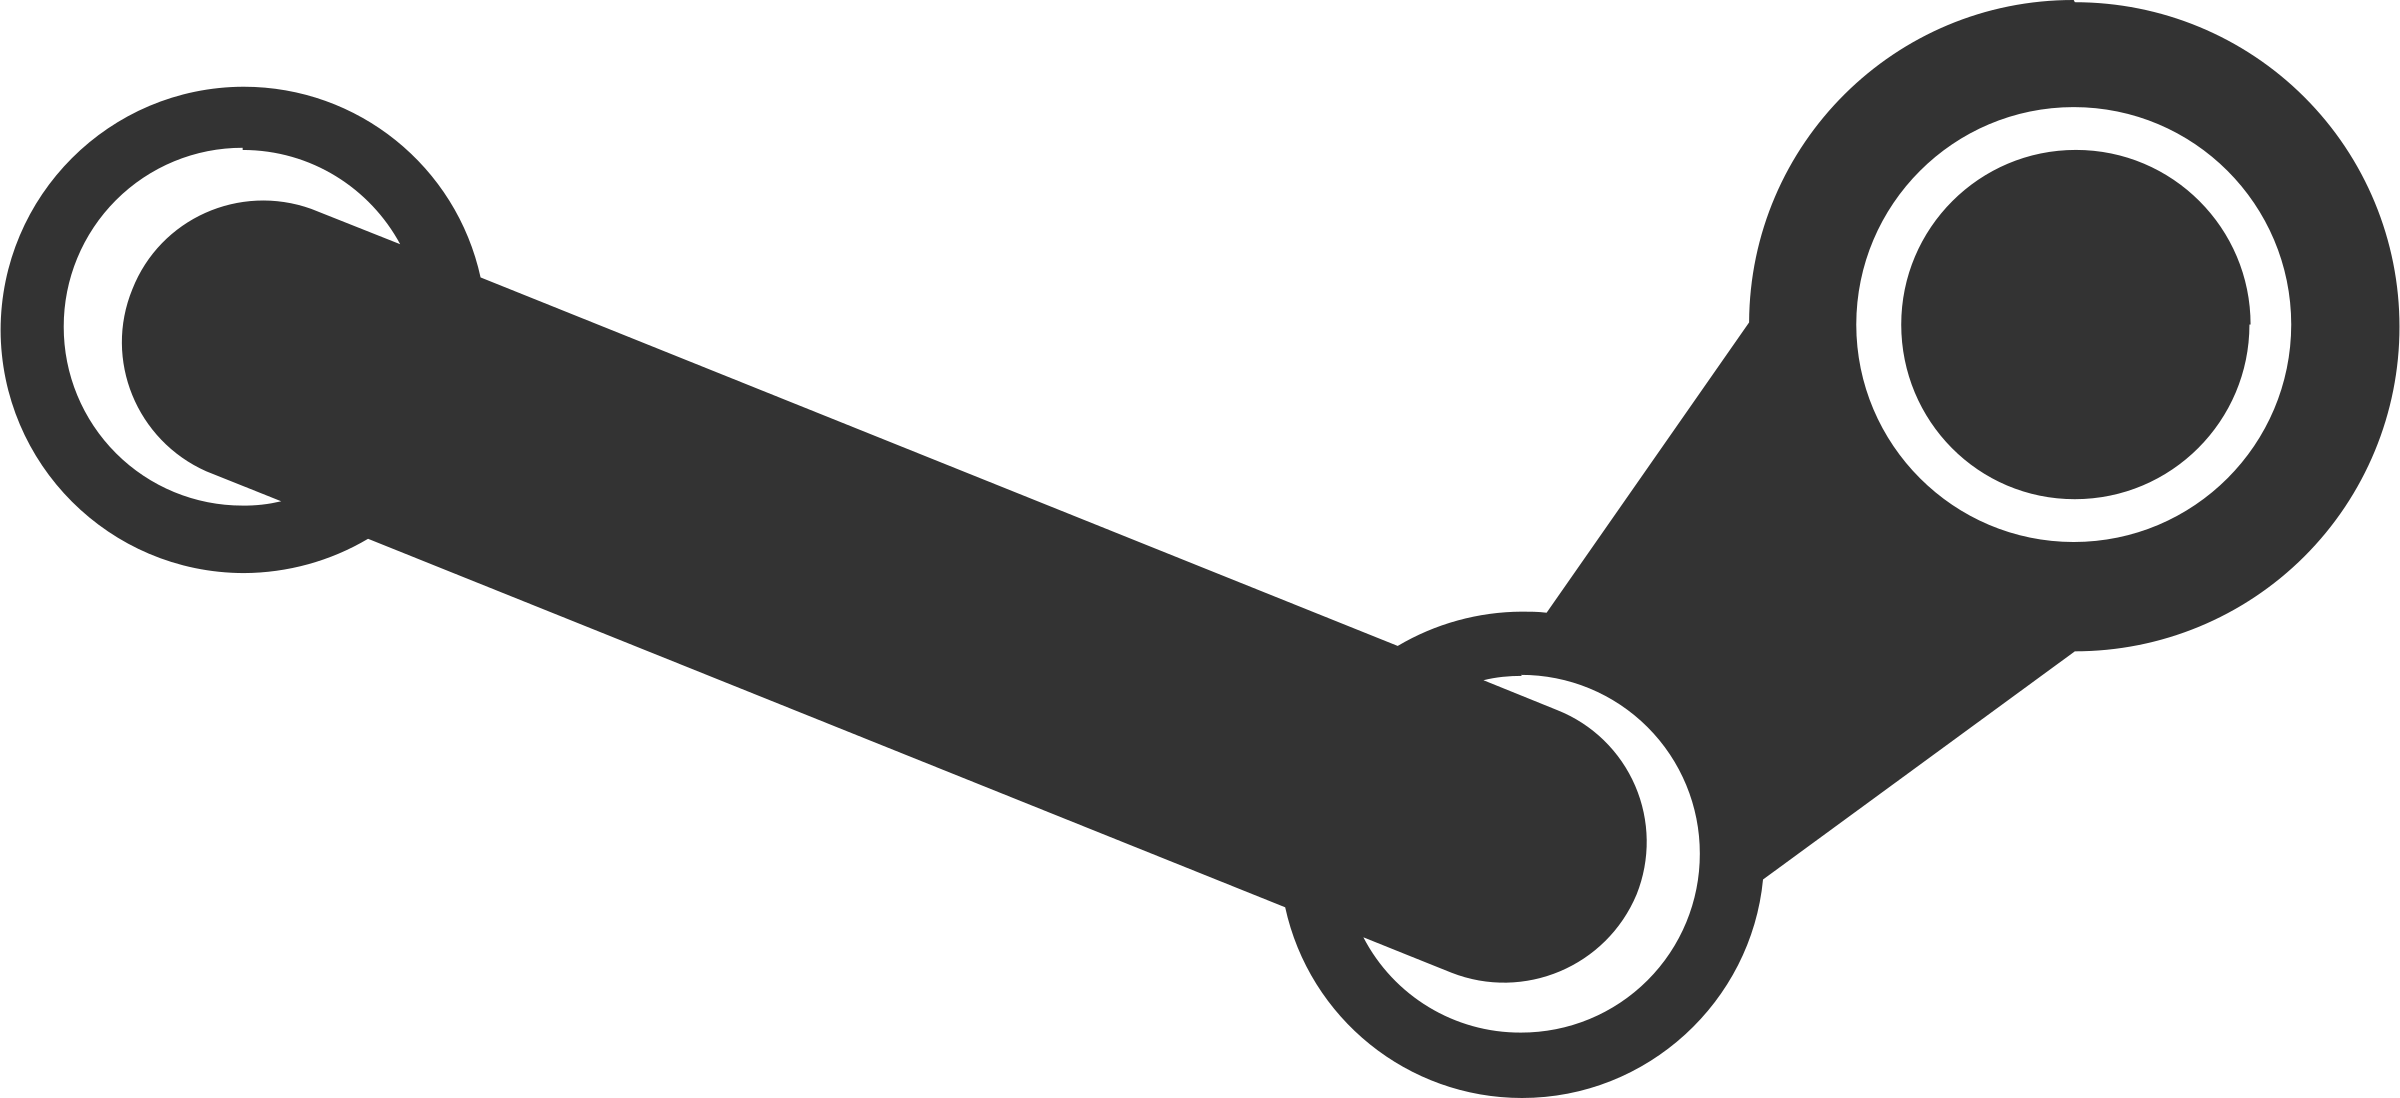 Steam Logo Transparent Background